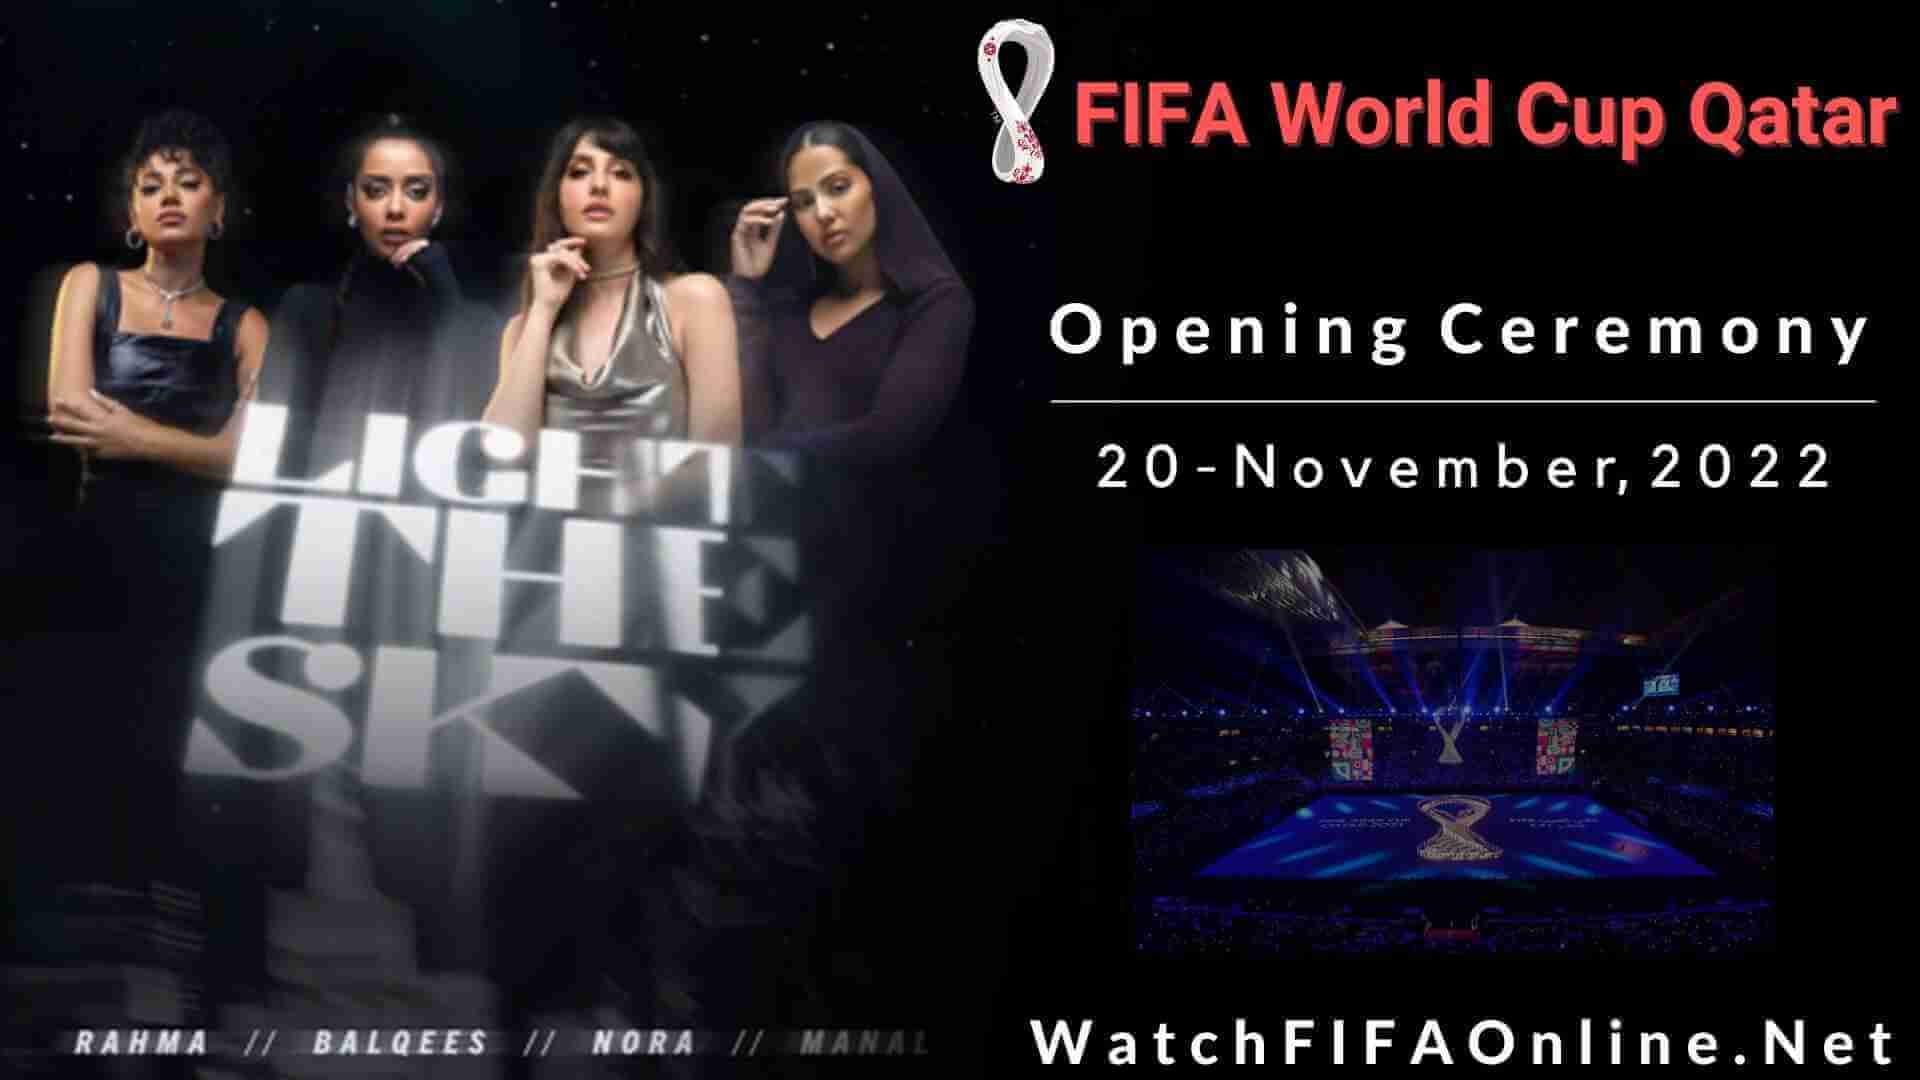 FIFA World Cup Qatar Opening Ceremony 2022